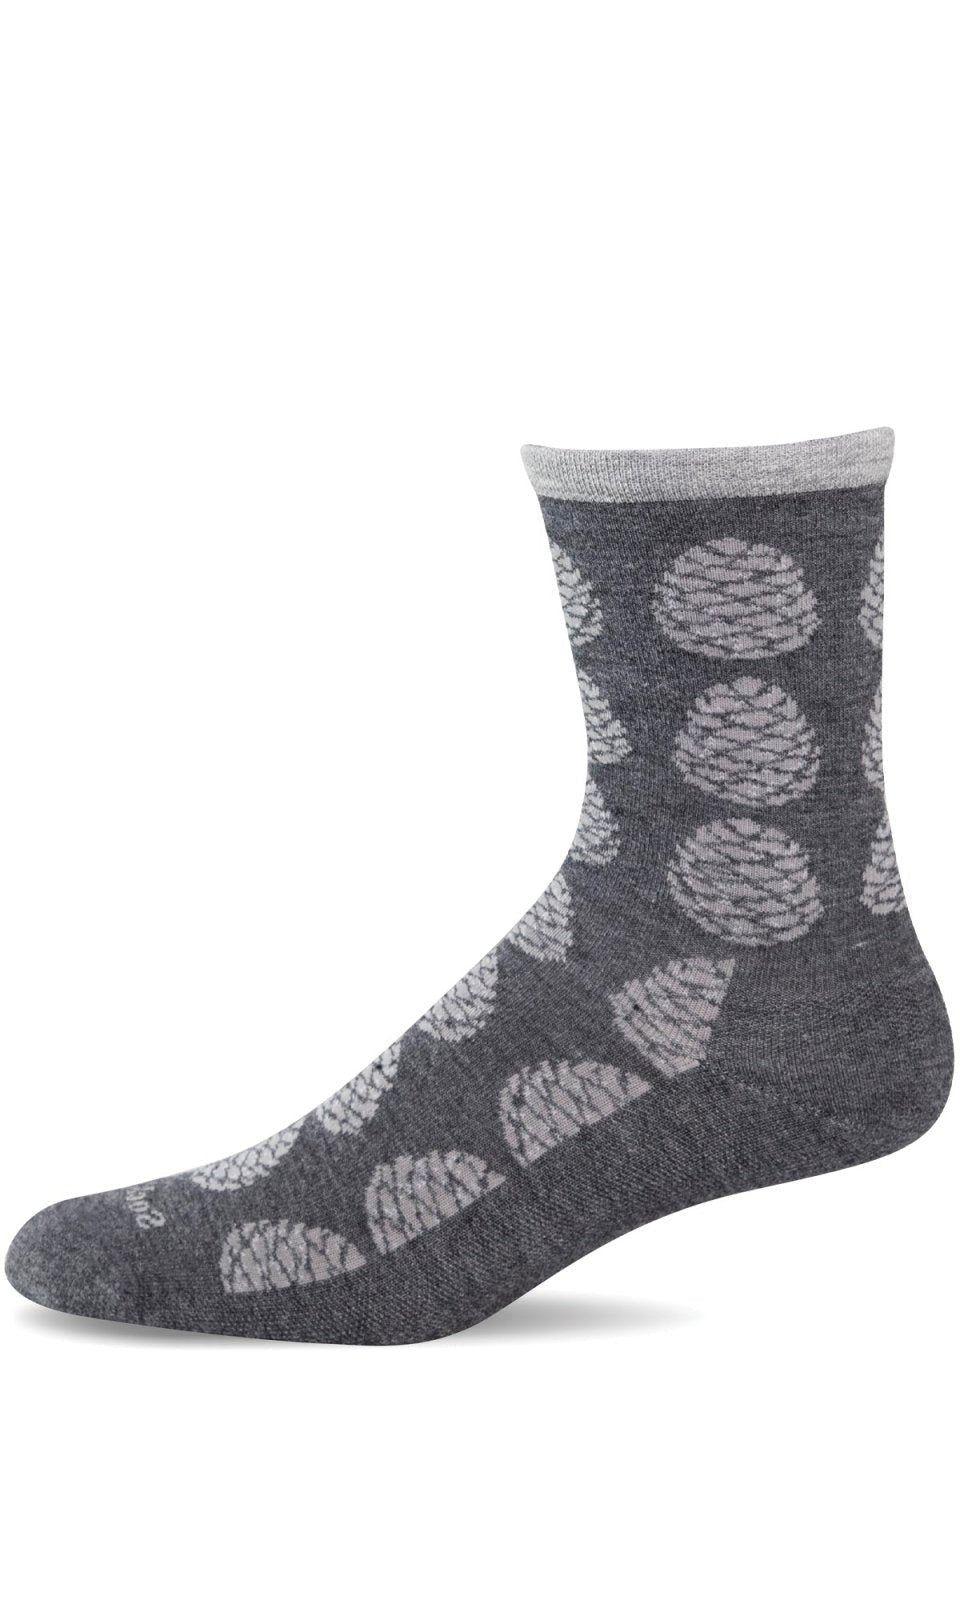 Spruce | Charcoal - Socks - Sockwell